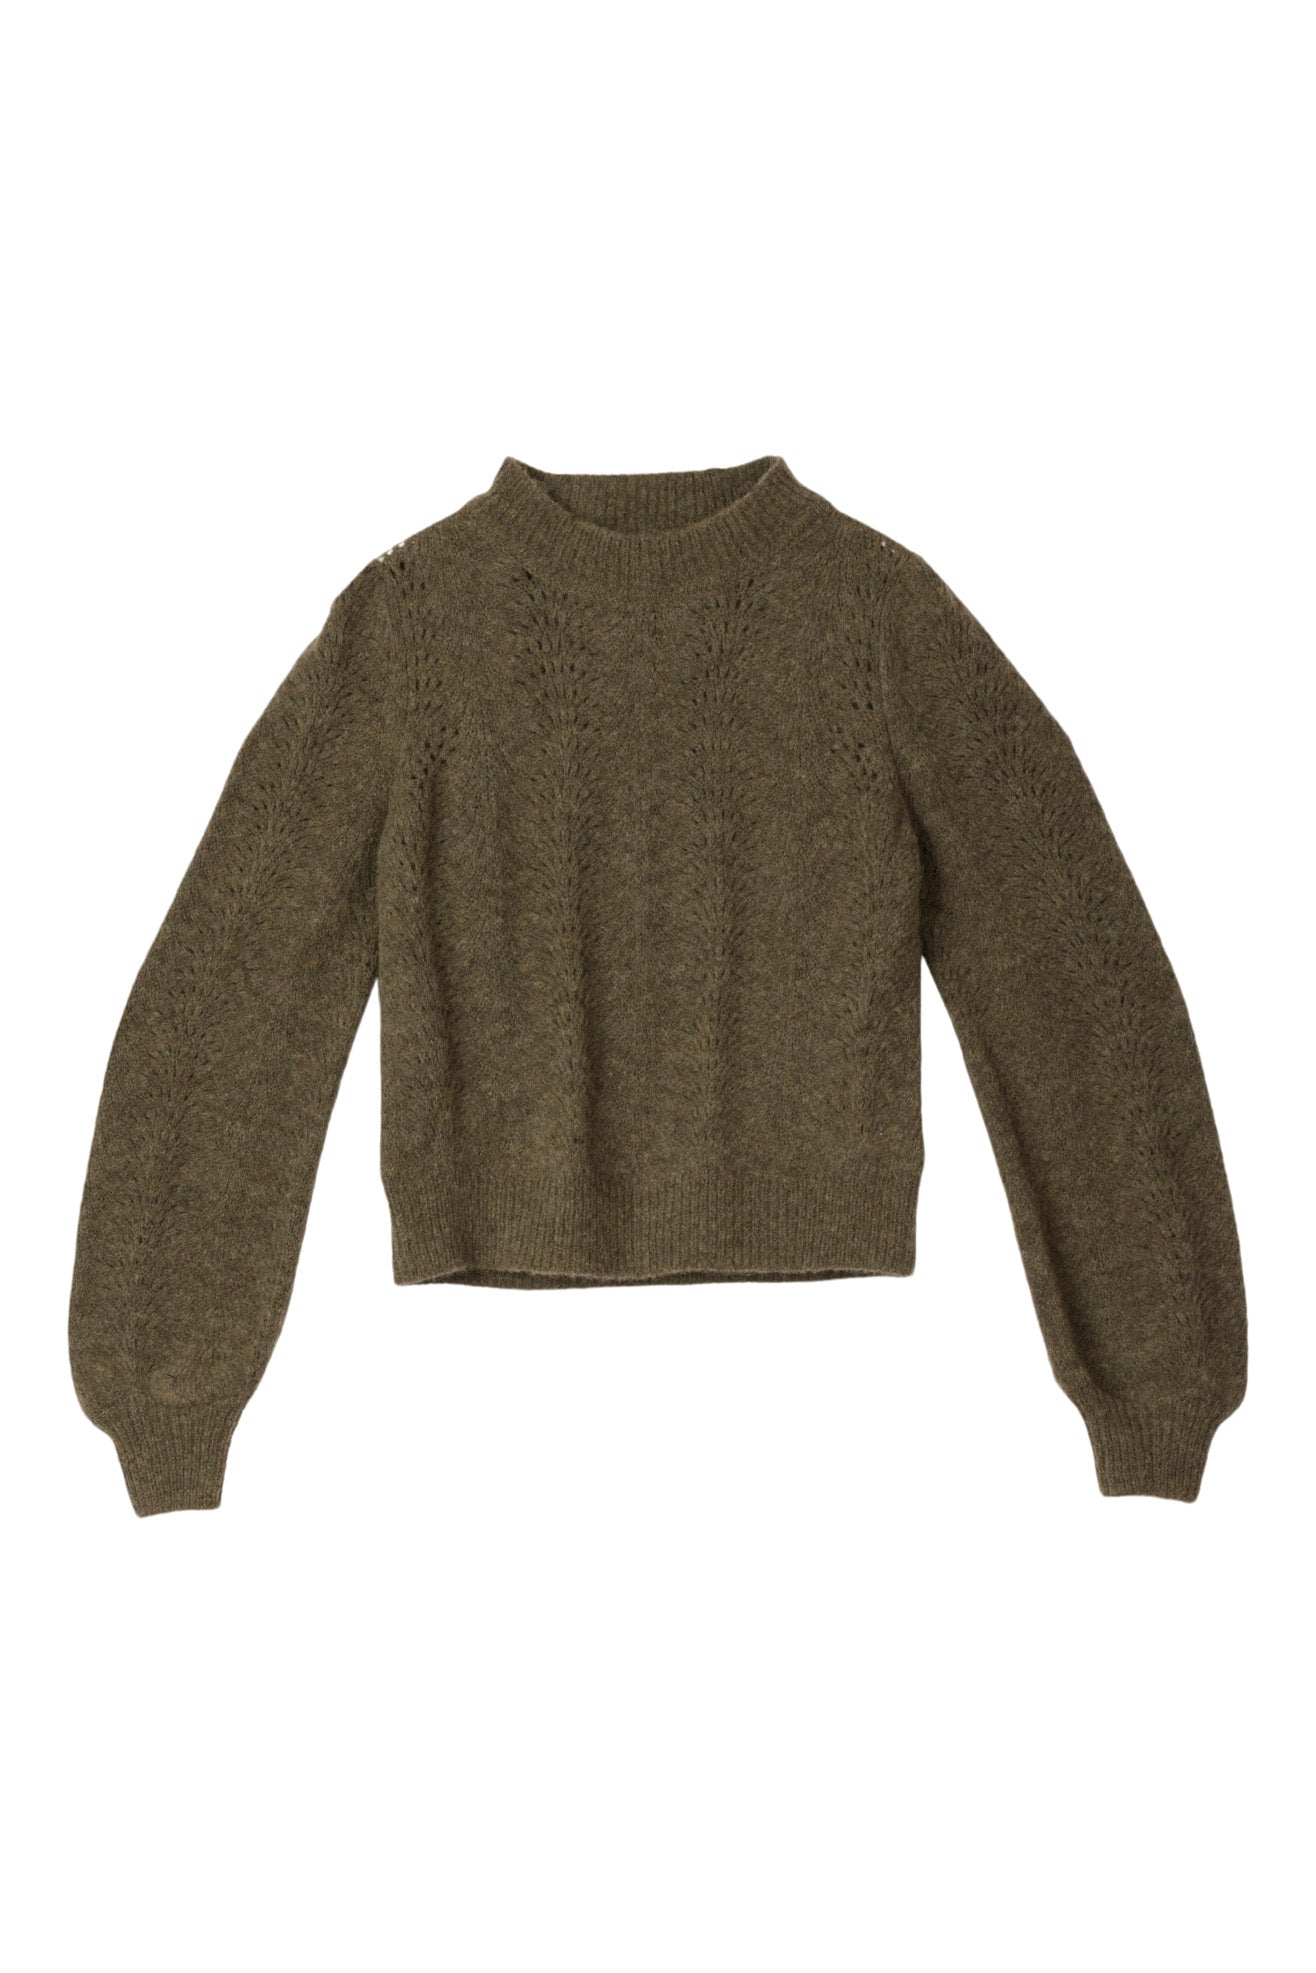 Xirena Keely Sweater